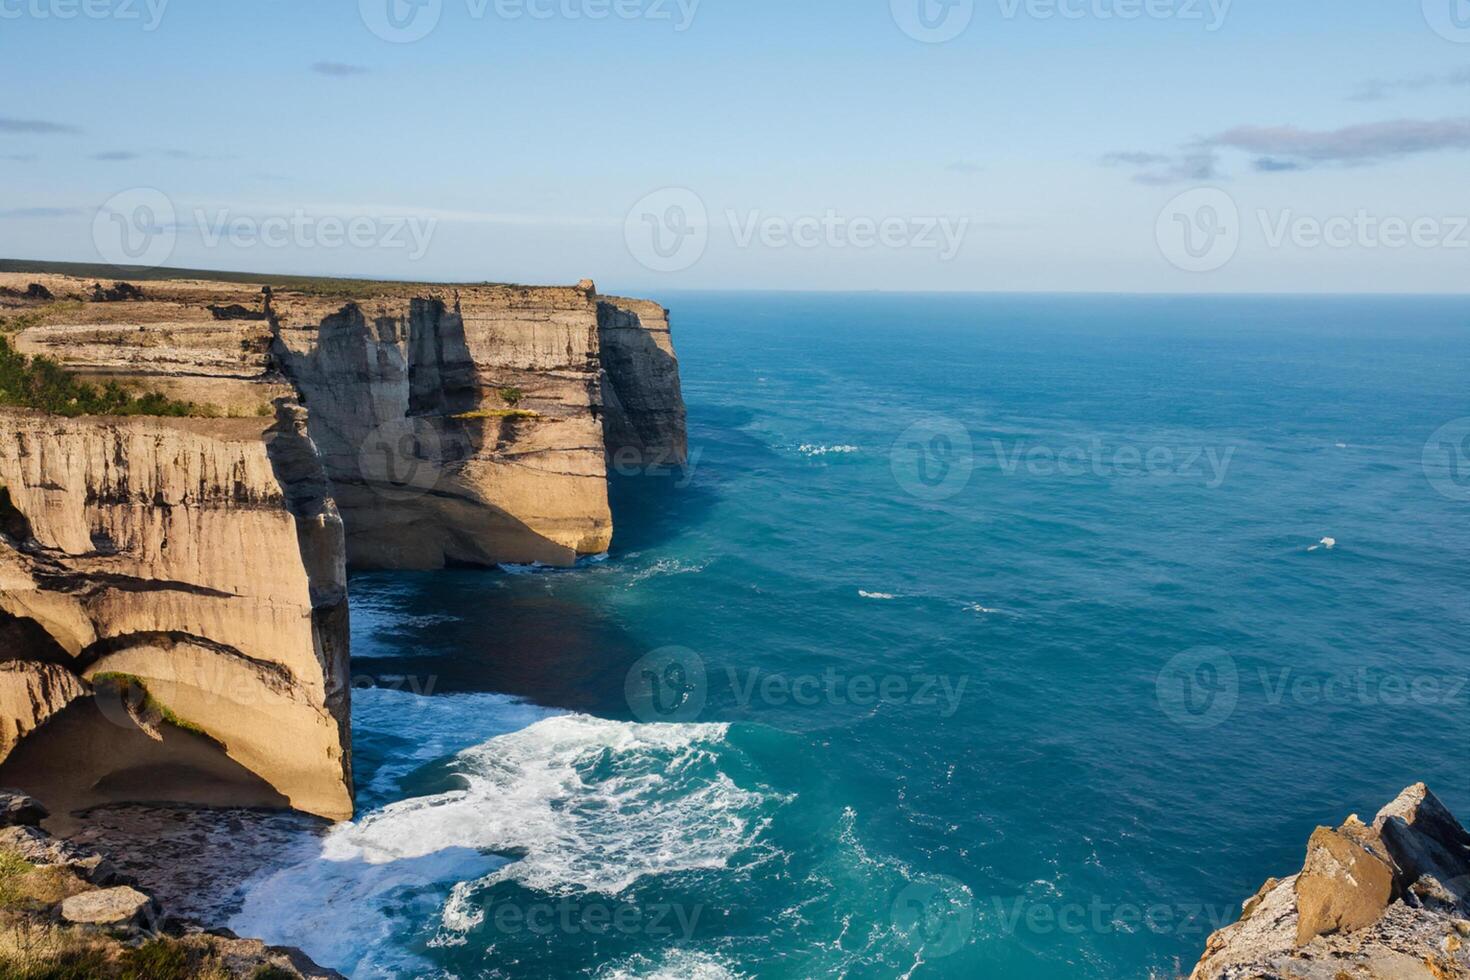 Seaside Majesty Breathtaking Coastal Cliffs Meet Stunning Blue Sea, A Spectacle of Nature's Grandeur photo